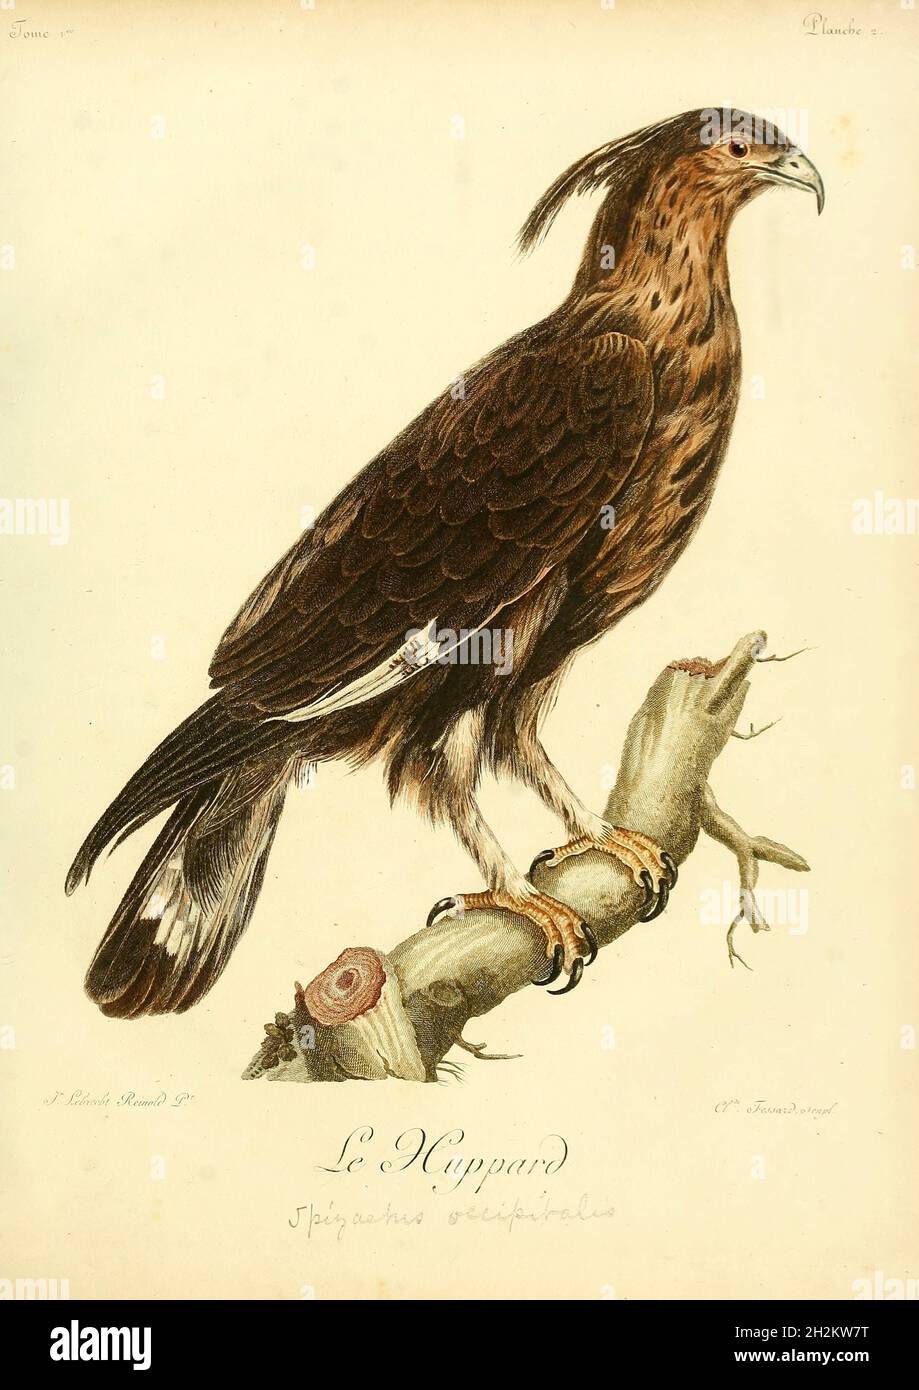 Long-crested eagle, 18th century illustration Stock Photo